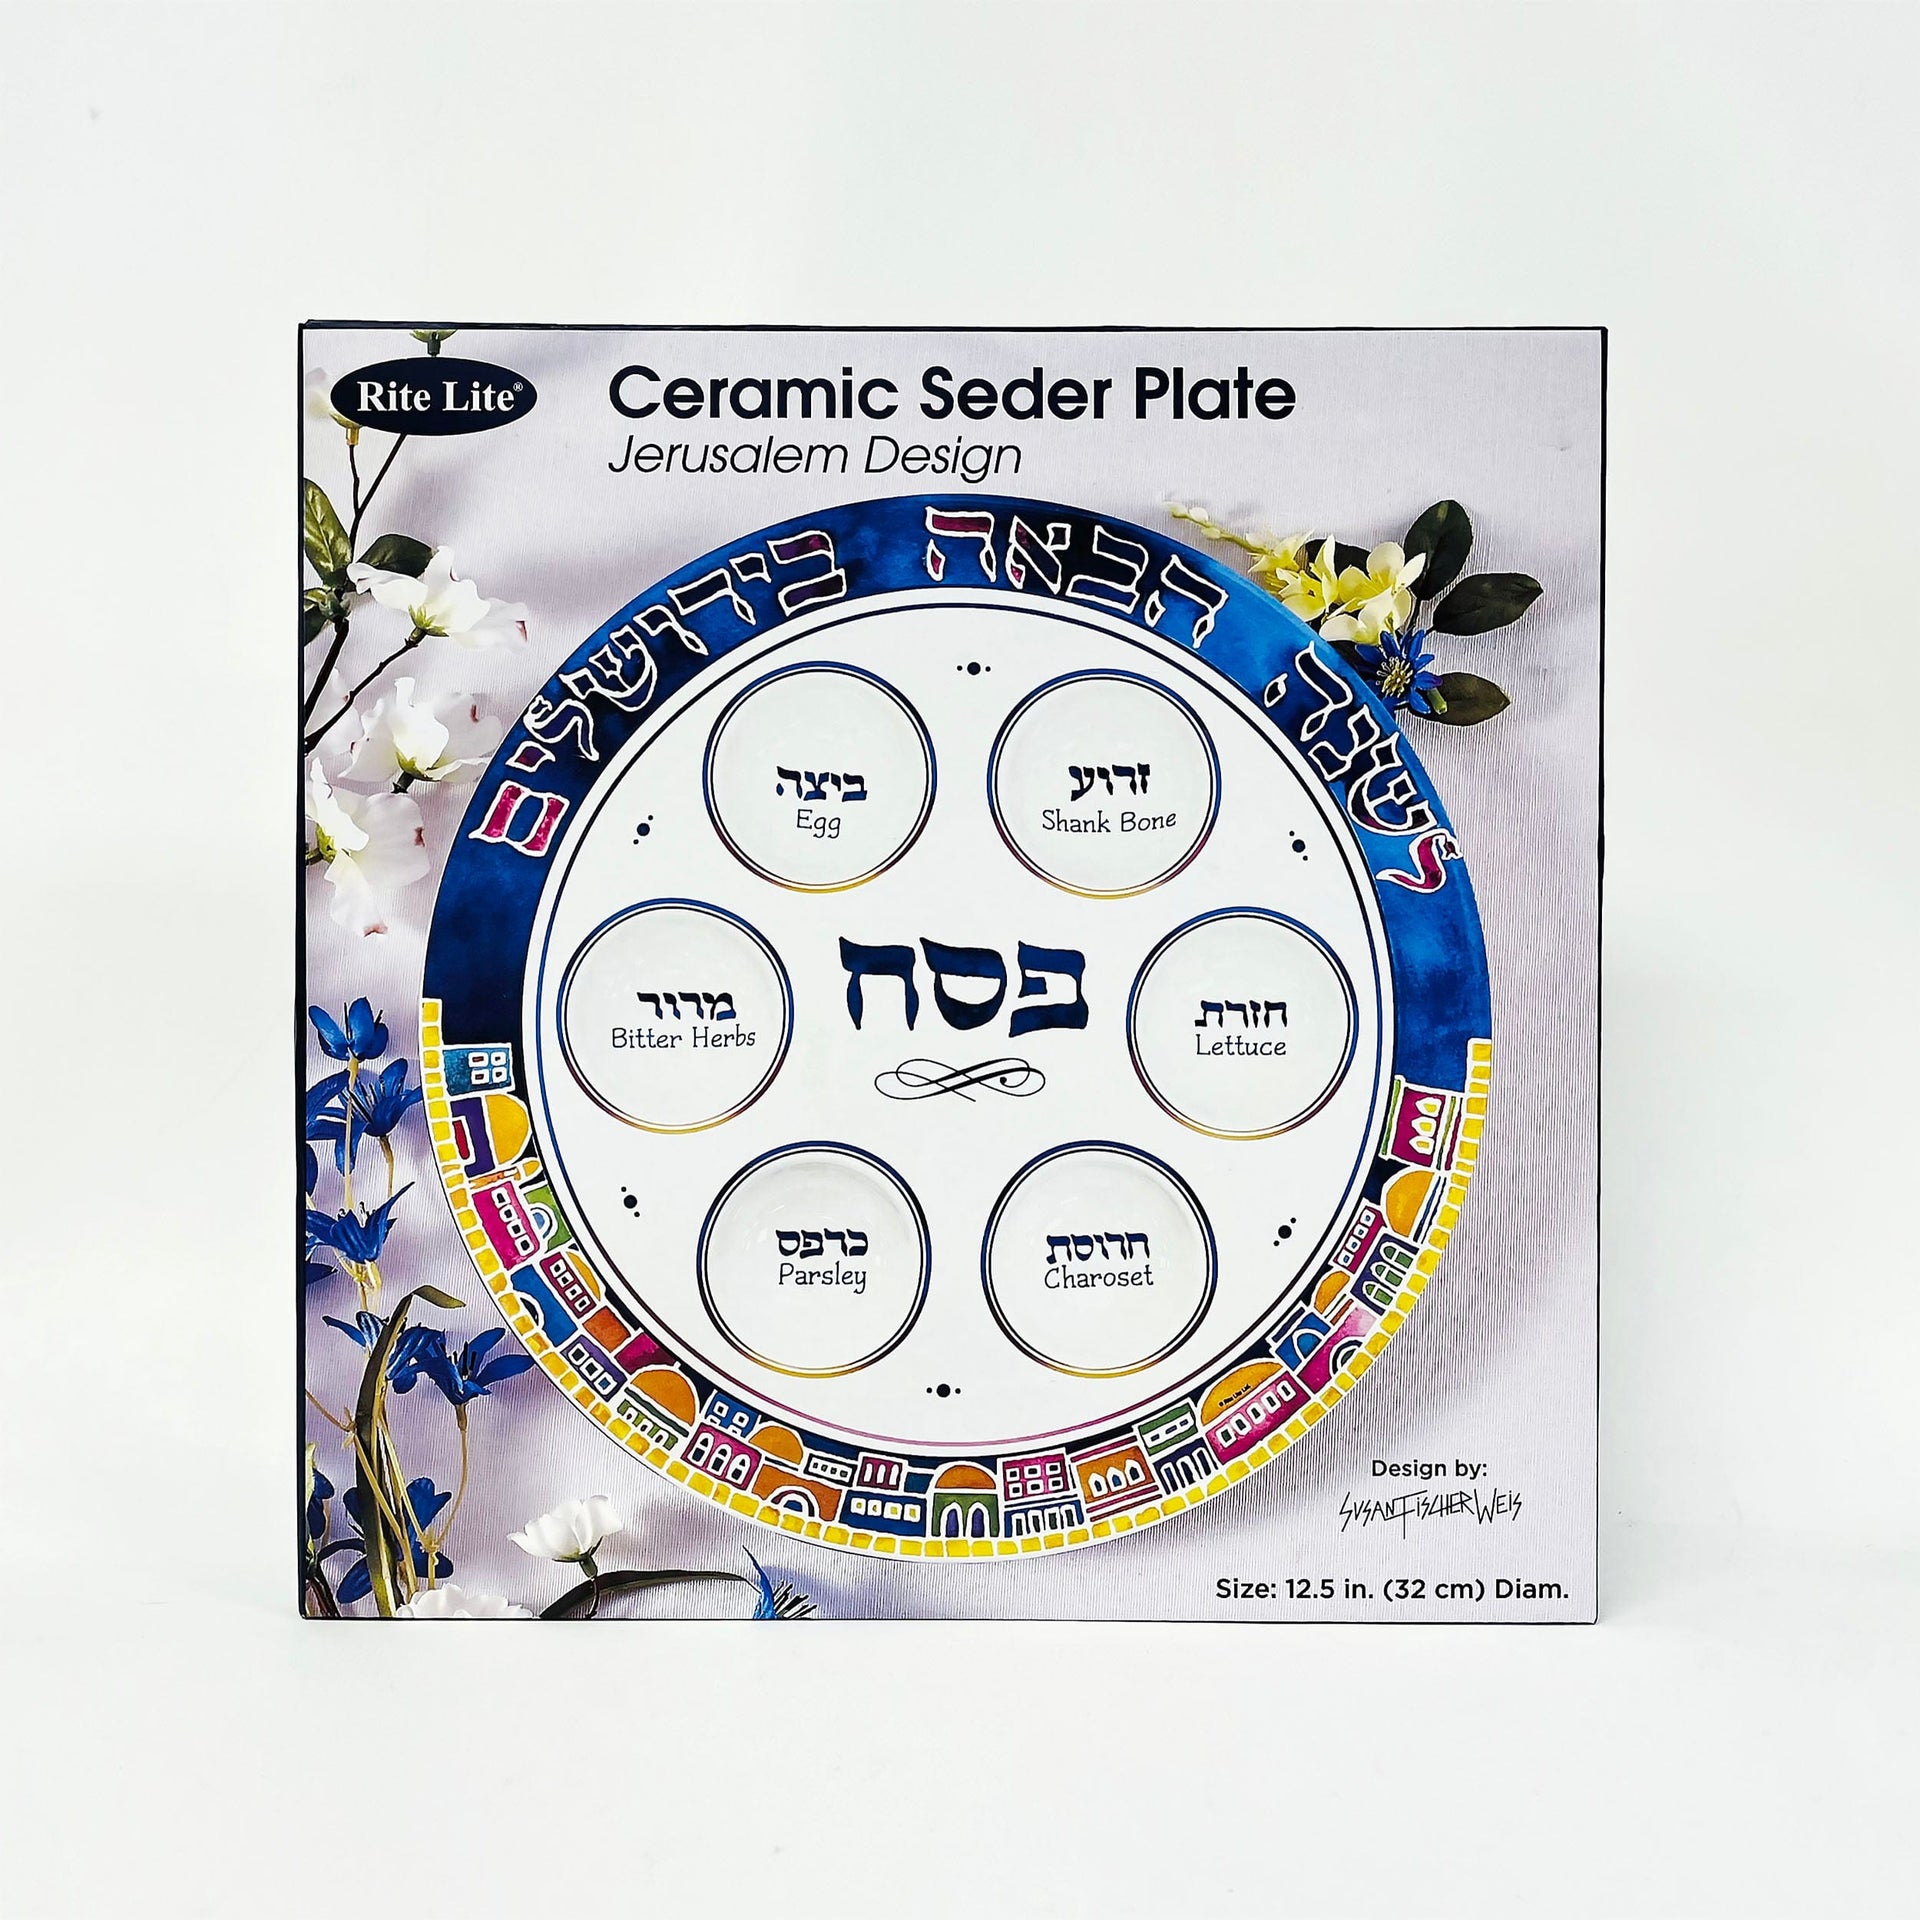 Rite Lite Seder Plates Singles Jerusalem Design Ceramic Seder Plate